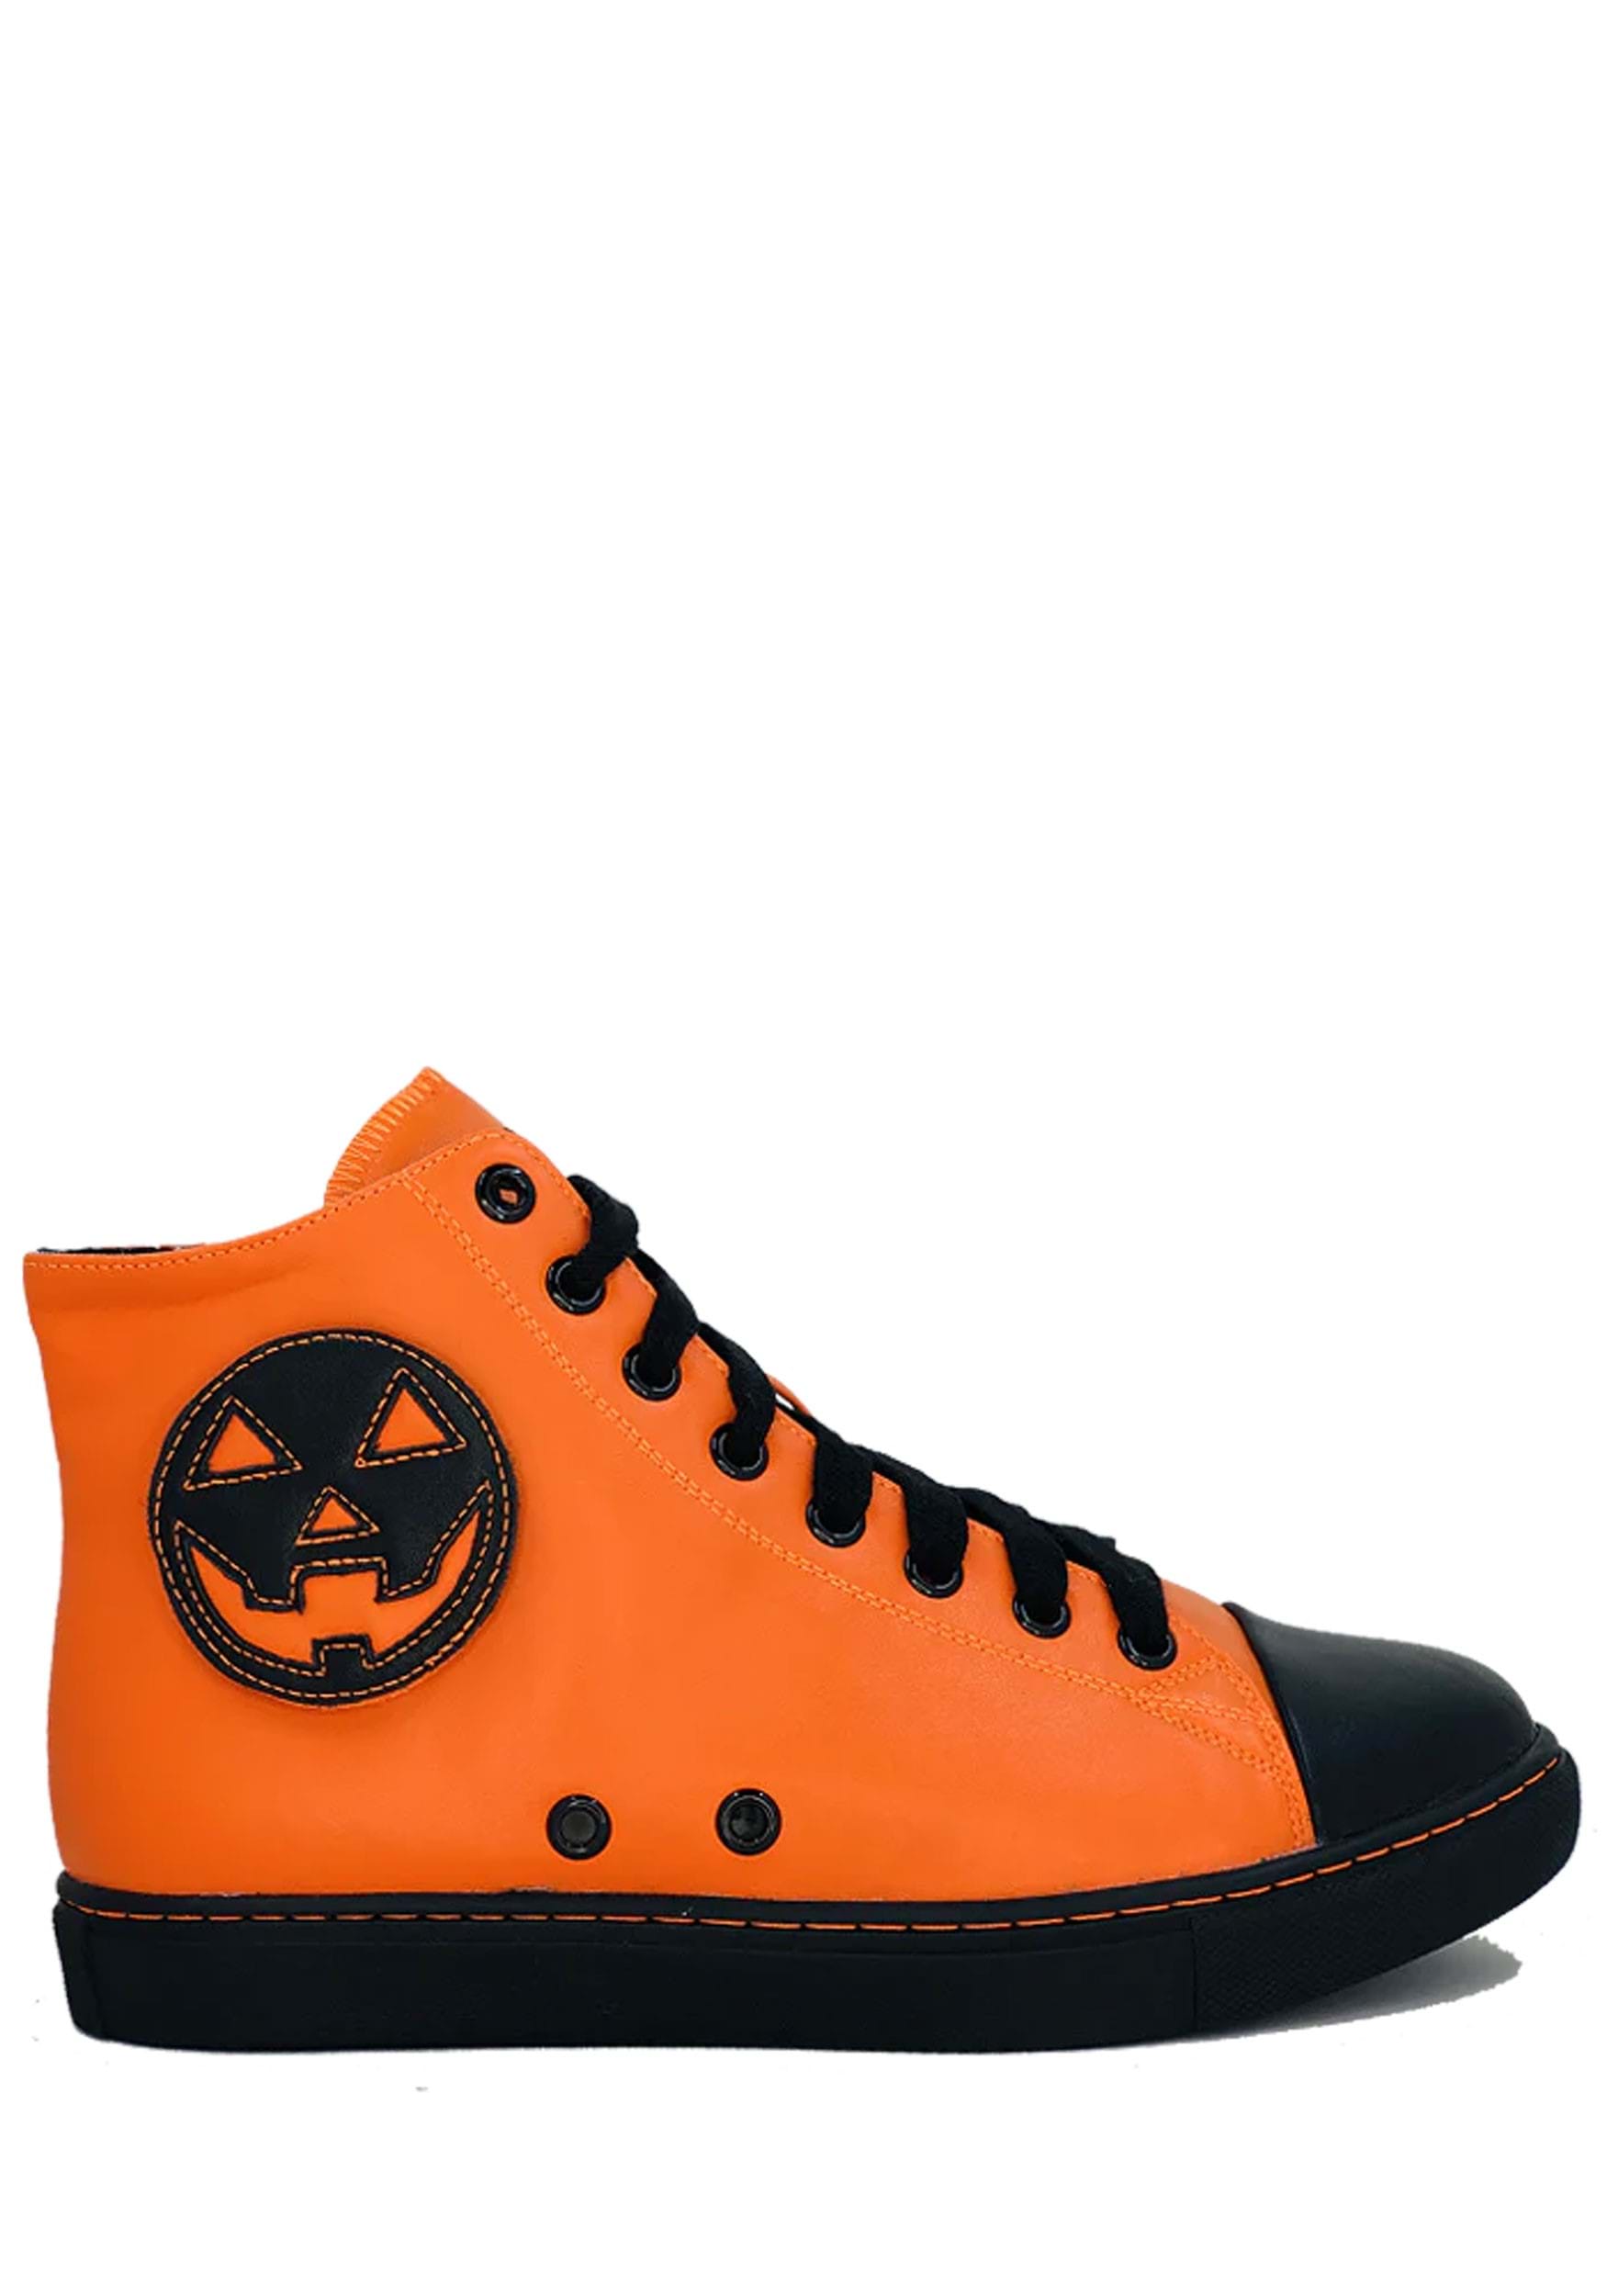 Image of Women's Orange Pumpkin Chelsea Jack High Top Sneaker | Halloween Footwear ID SVCHELSEAJACK-OR-13